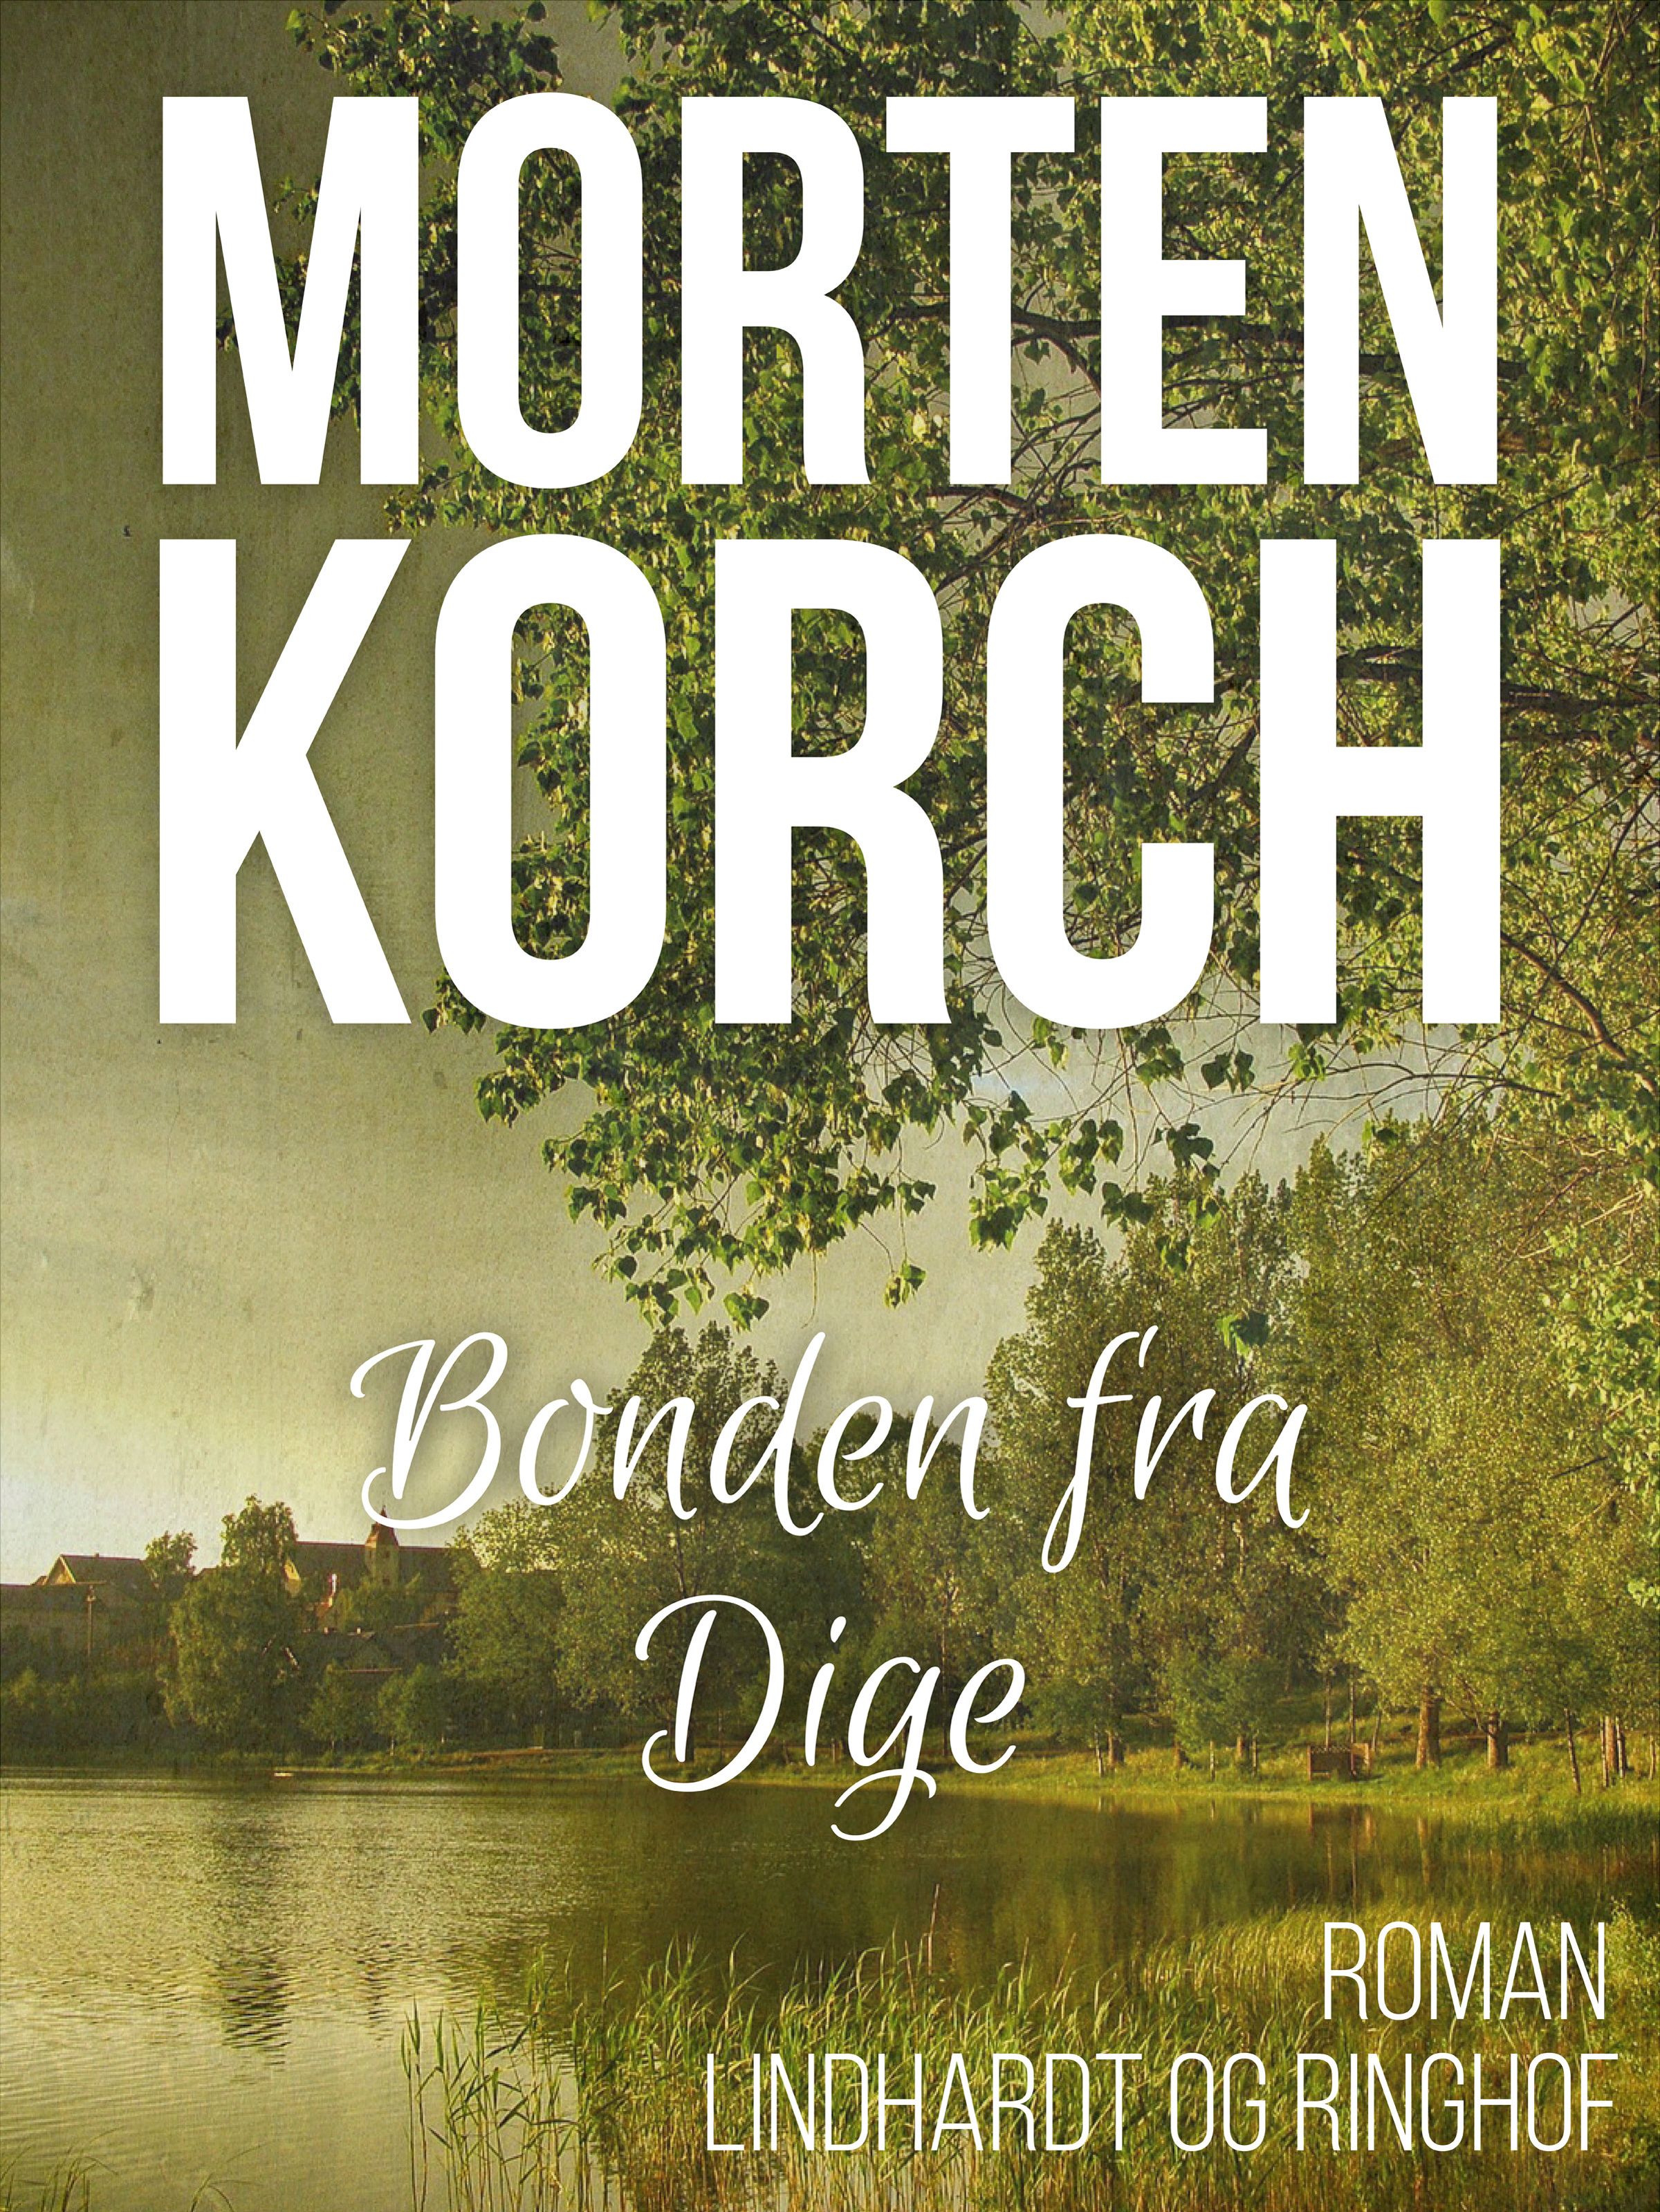 Bonden fra Dige, eBook by Morten Korch